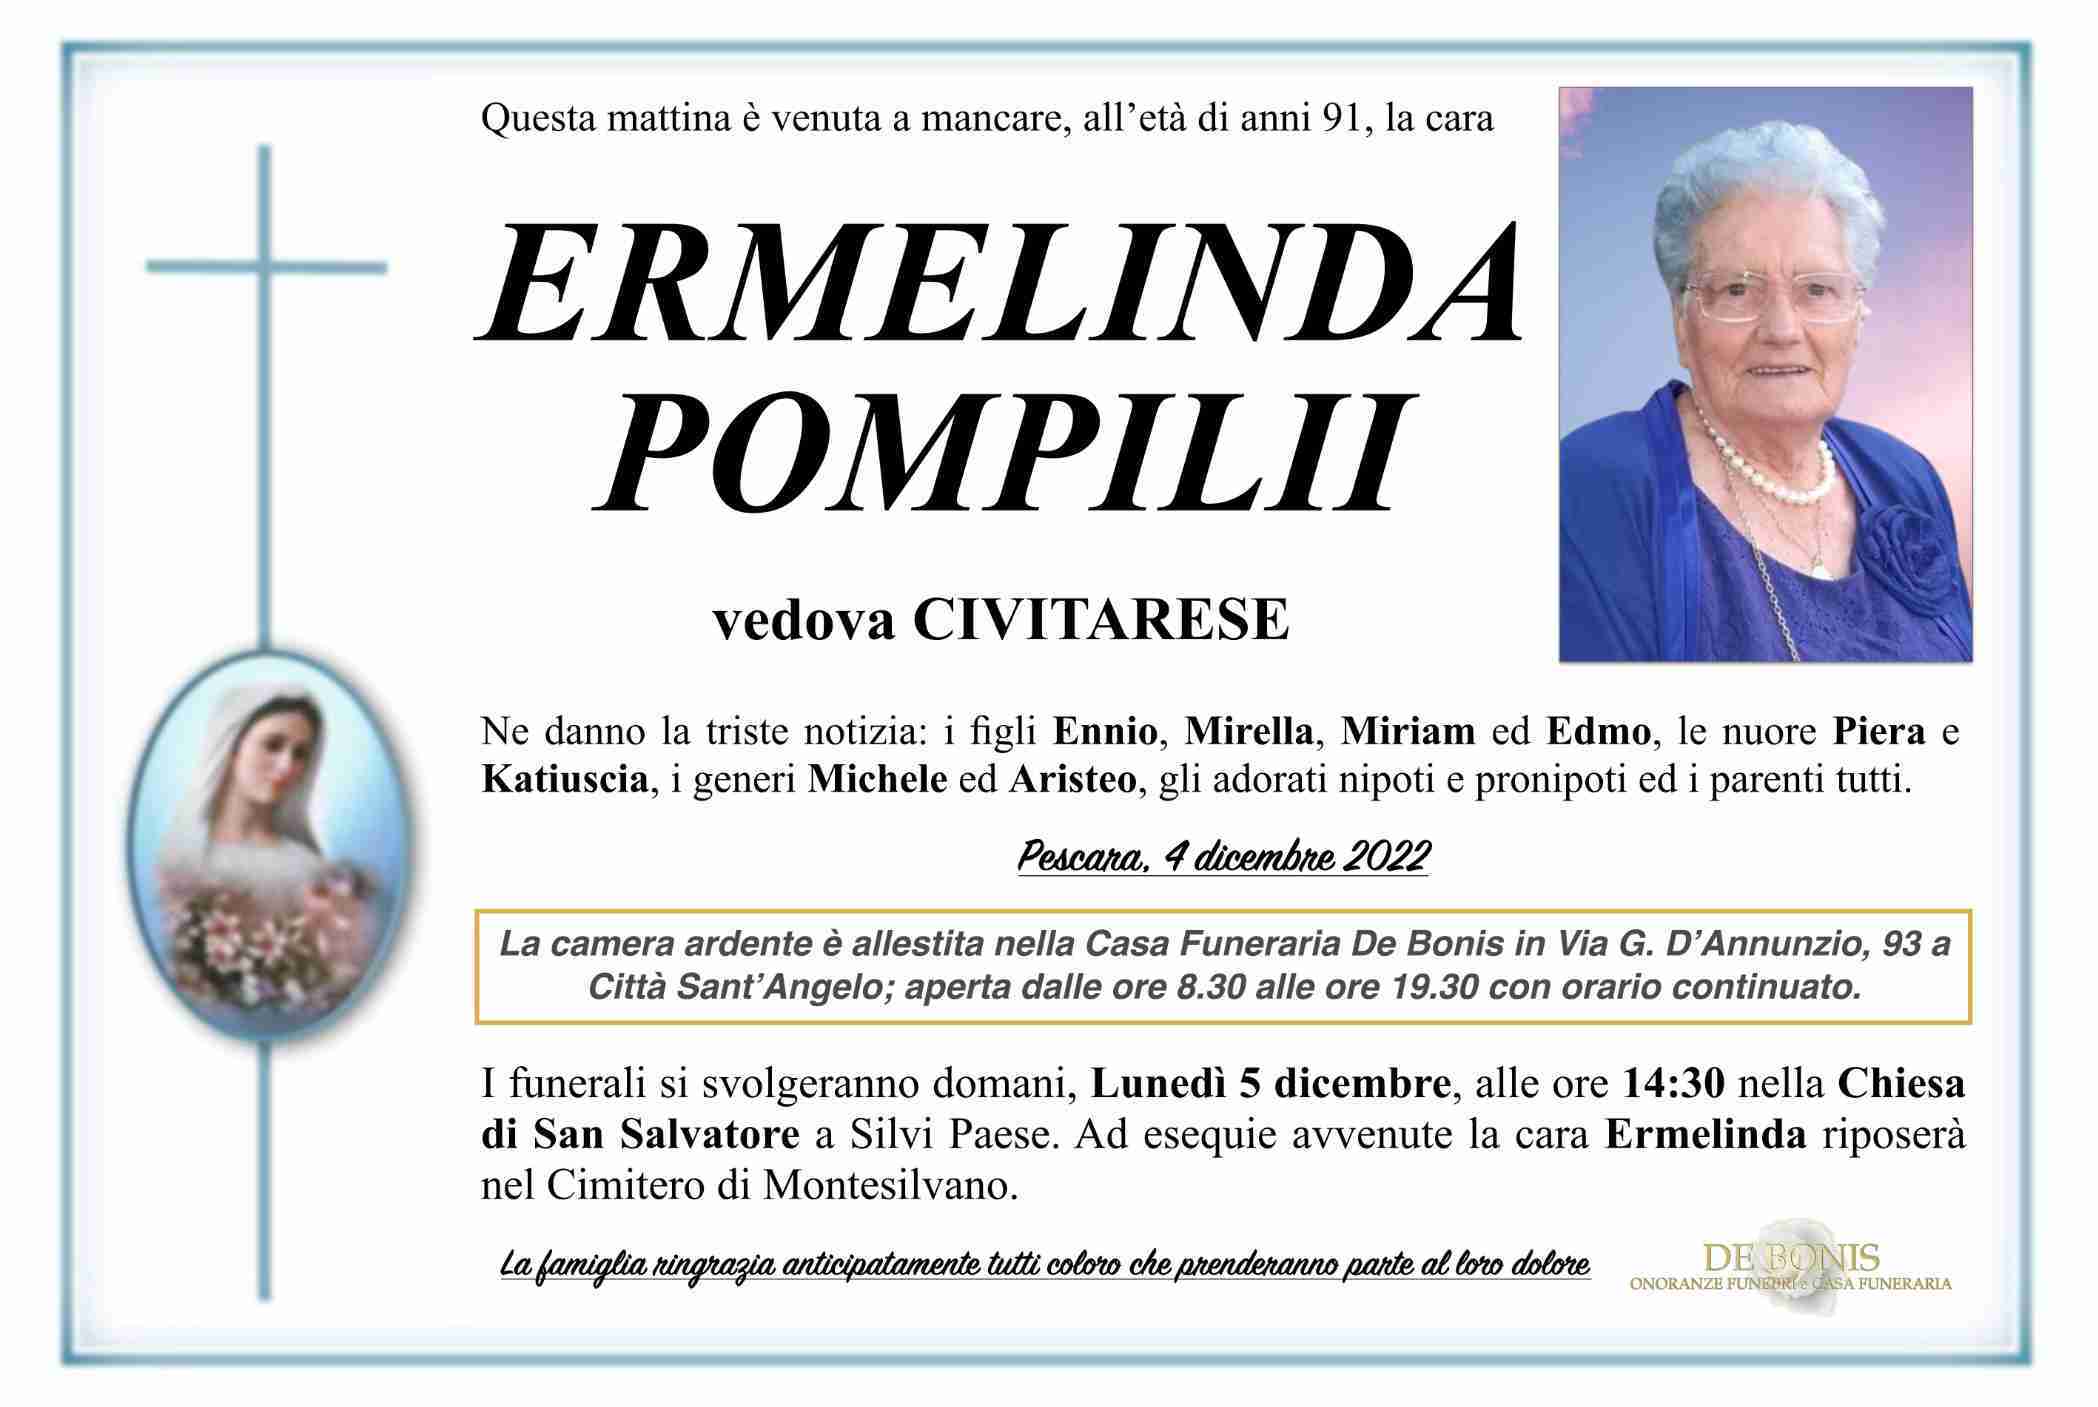 Ermelinda Pompilii